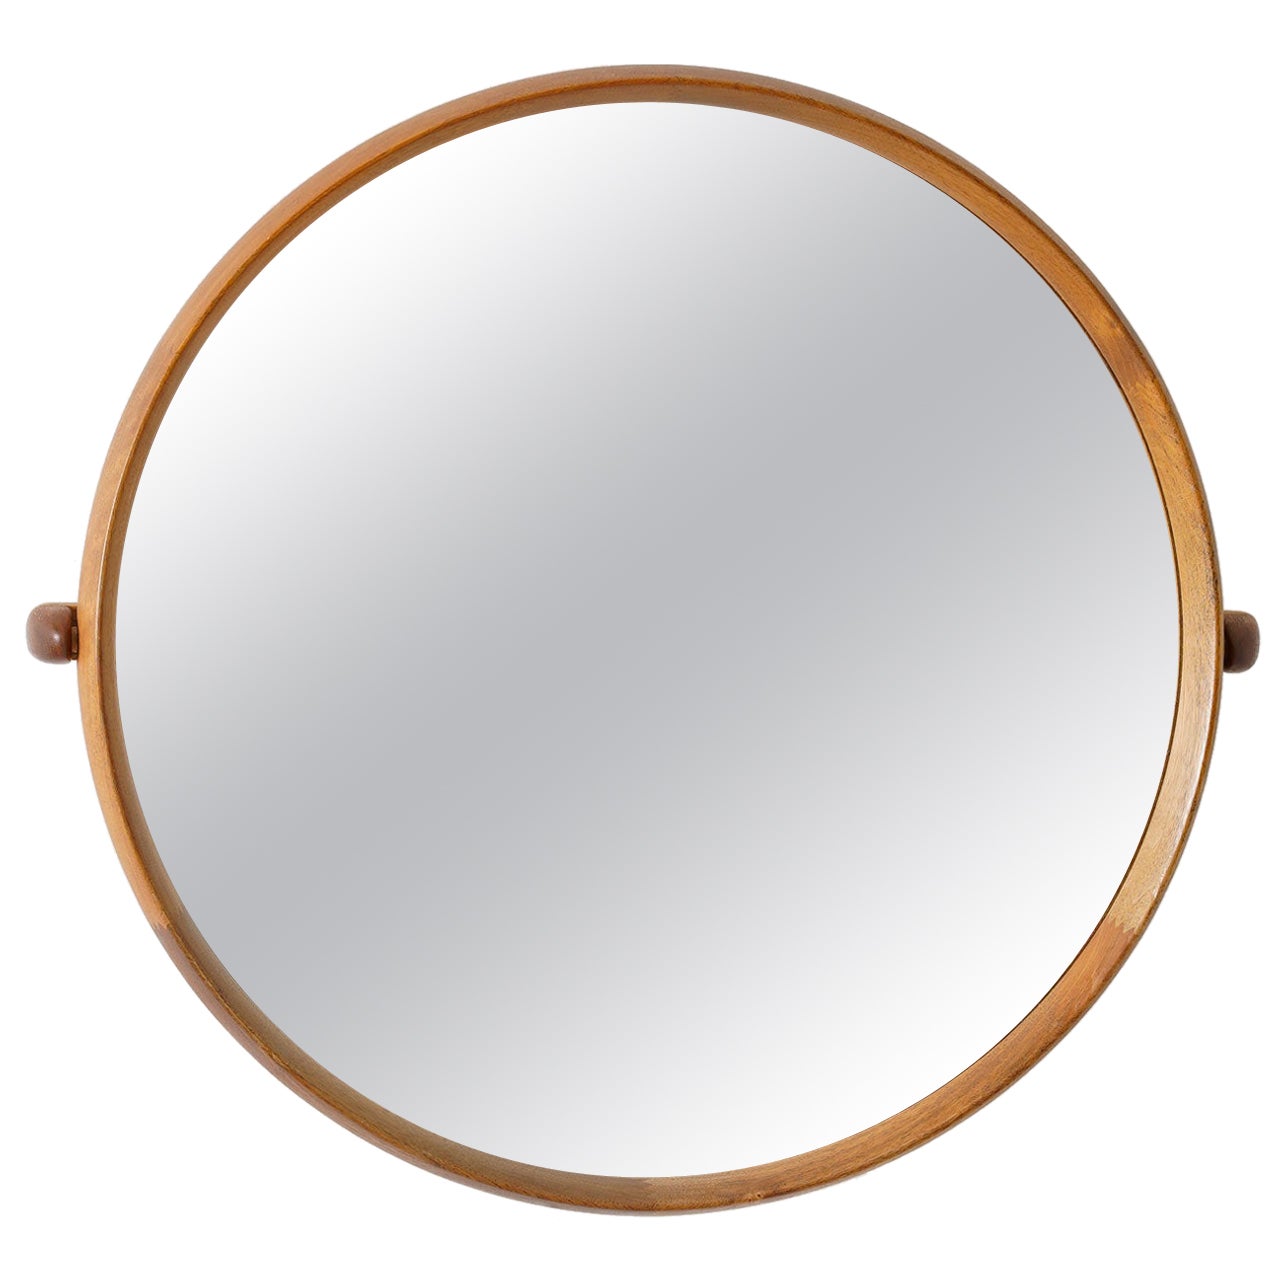 Round Swedish Midcentury Mirror in Teak by Uno & Östen Kristiansson for Luxus For Sale